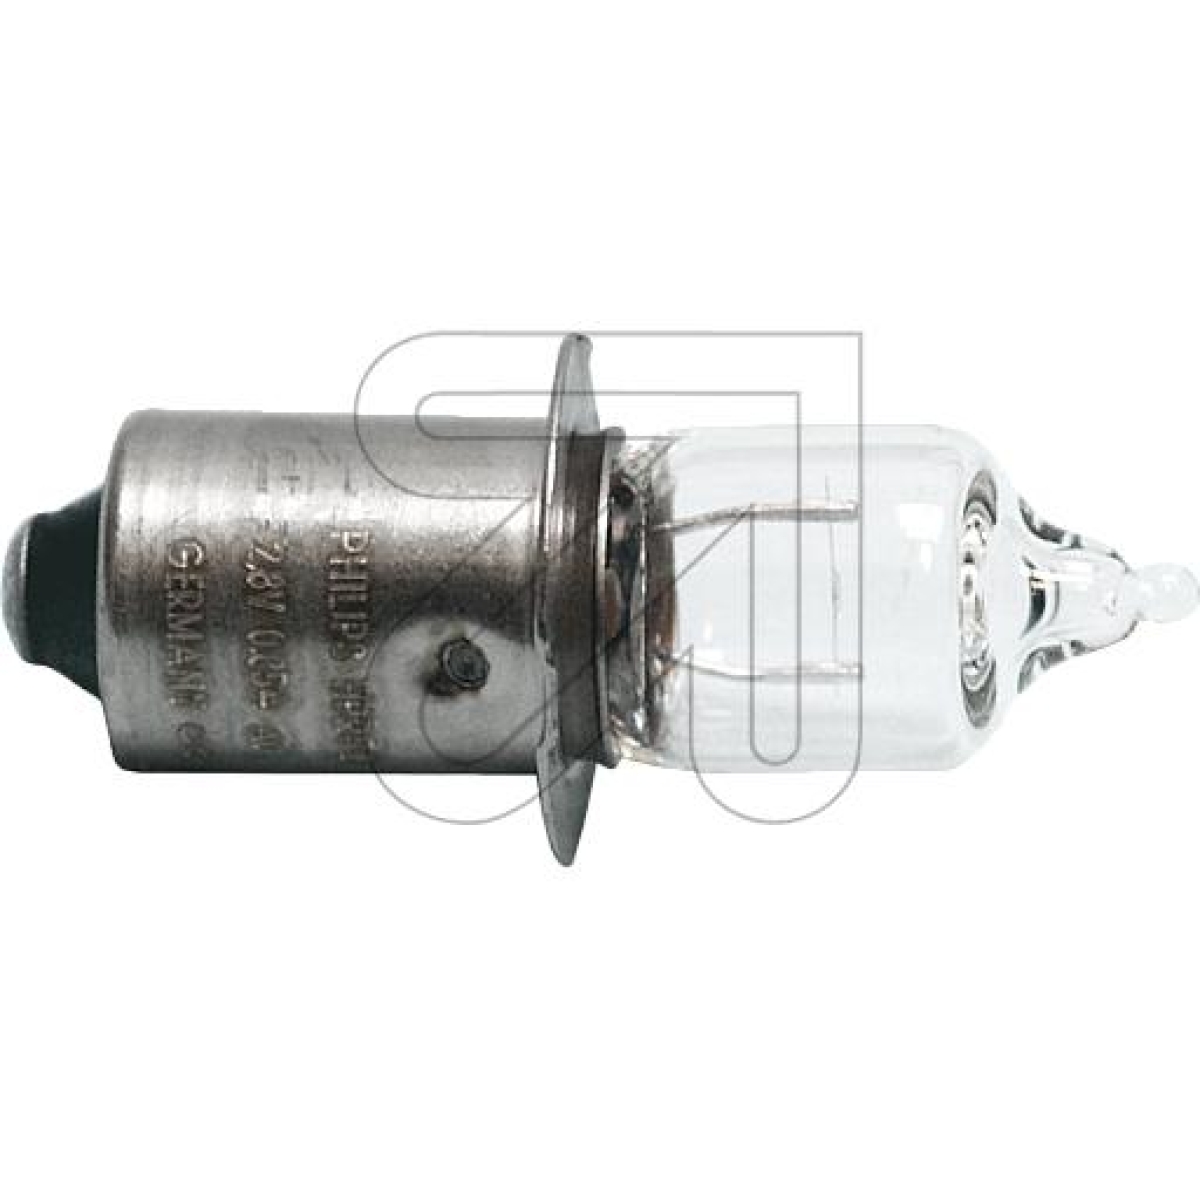 Artashalogen lamp PX13.5 2.8V 0.85A